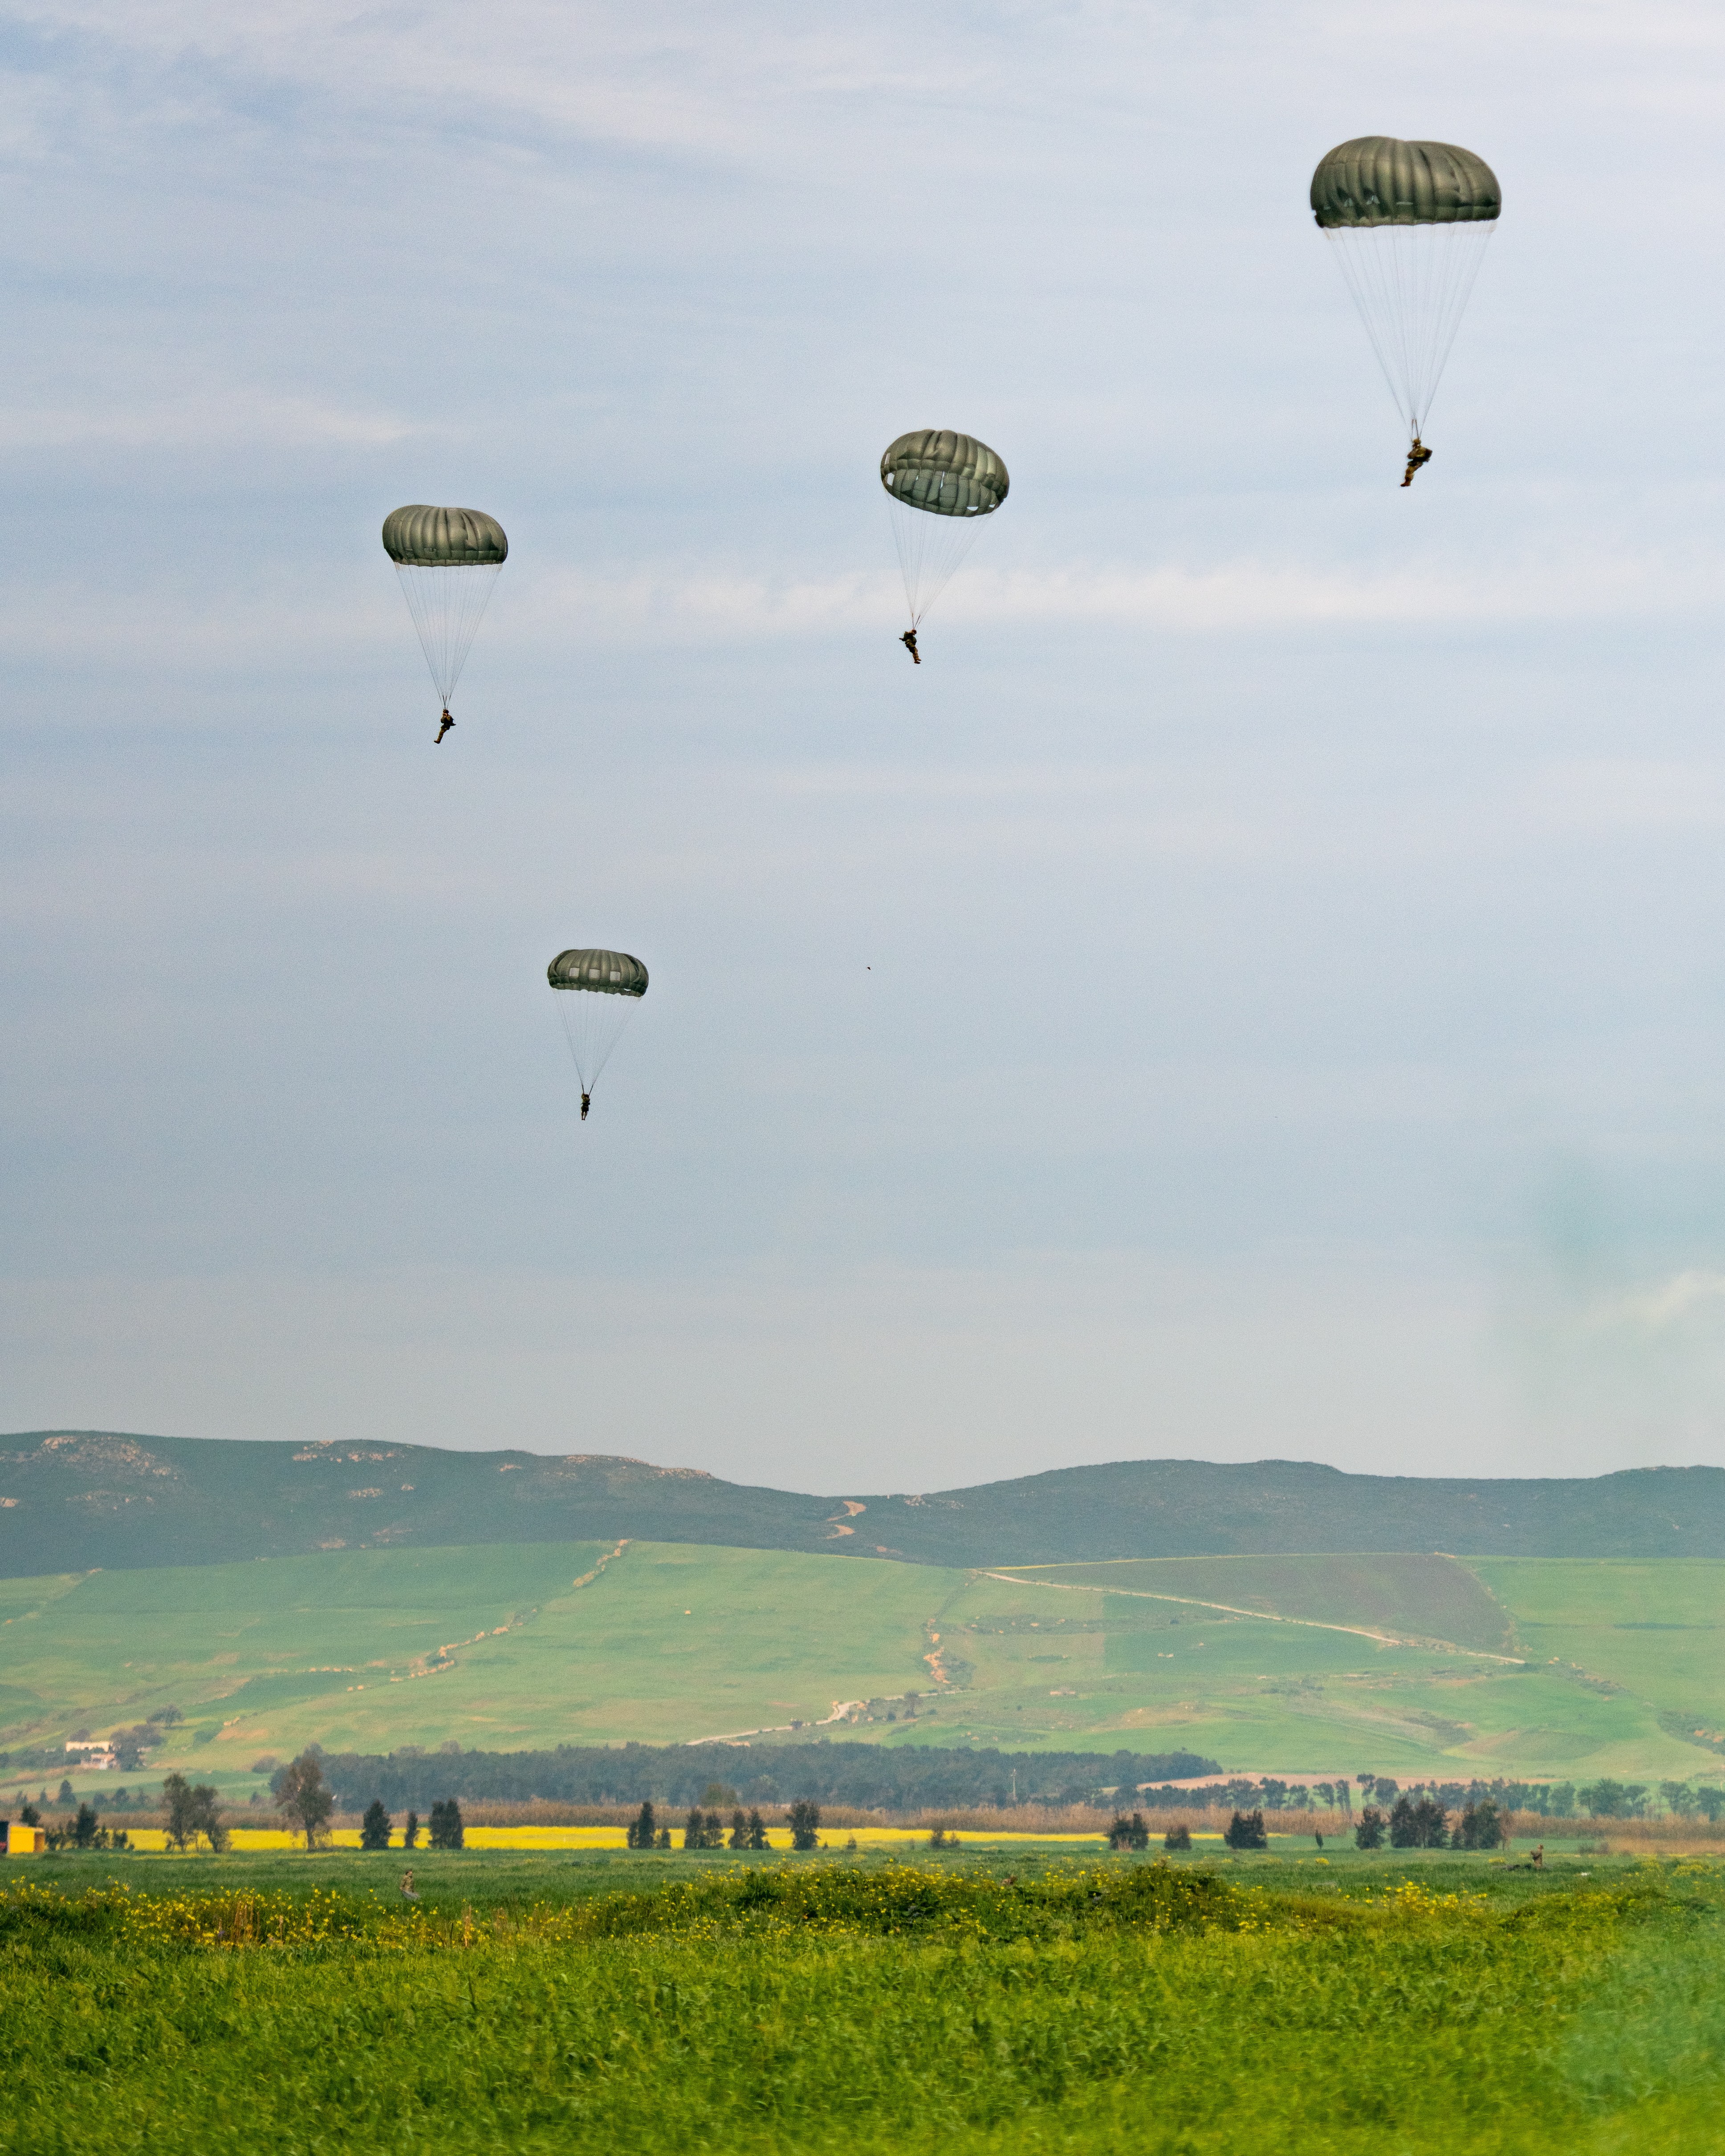 SETAF-AF, 173rd Paratroopers strengthen interoperability with 